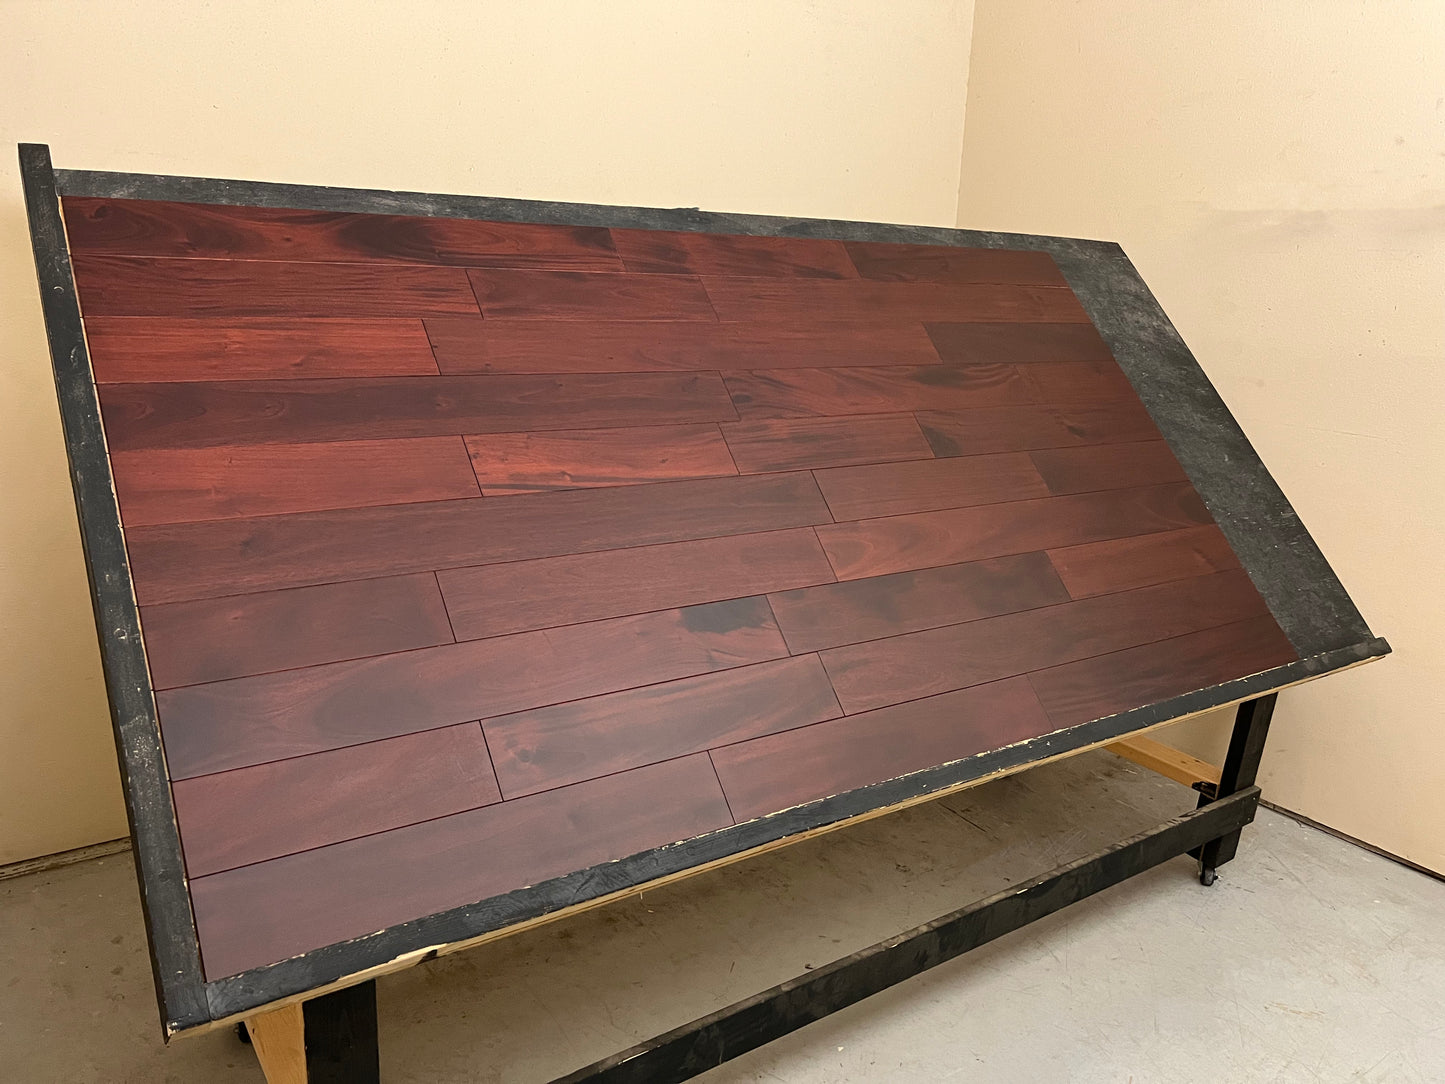 4 1/3" x 5/8" Solid Mahogany Portos Hardwood Flooring